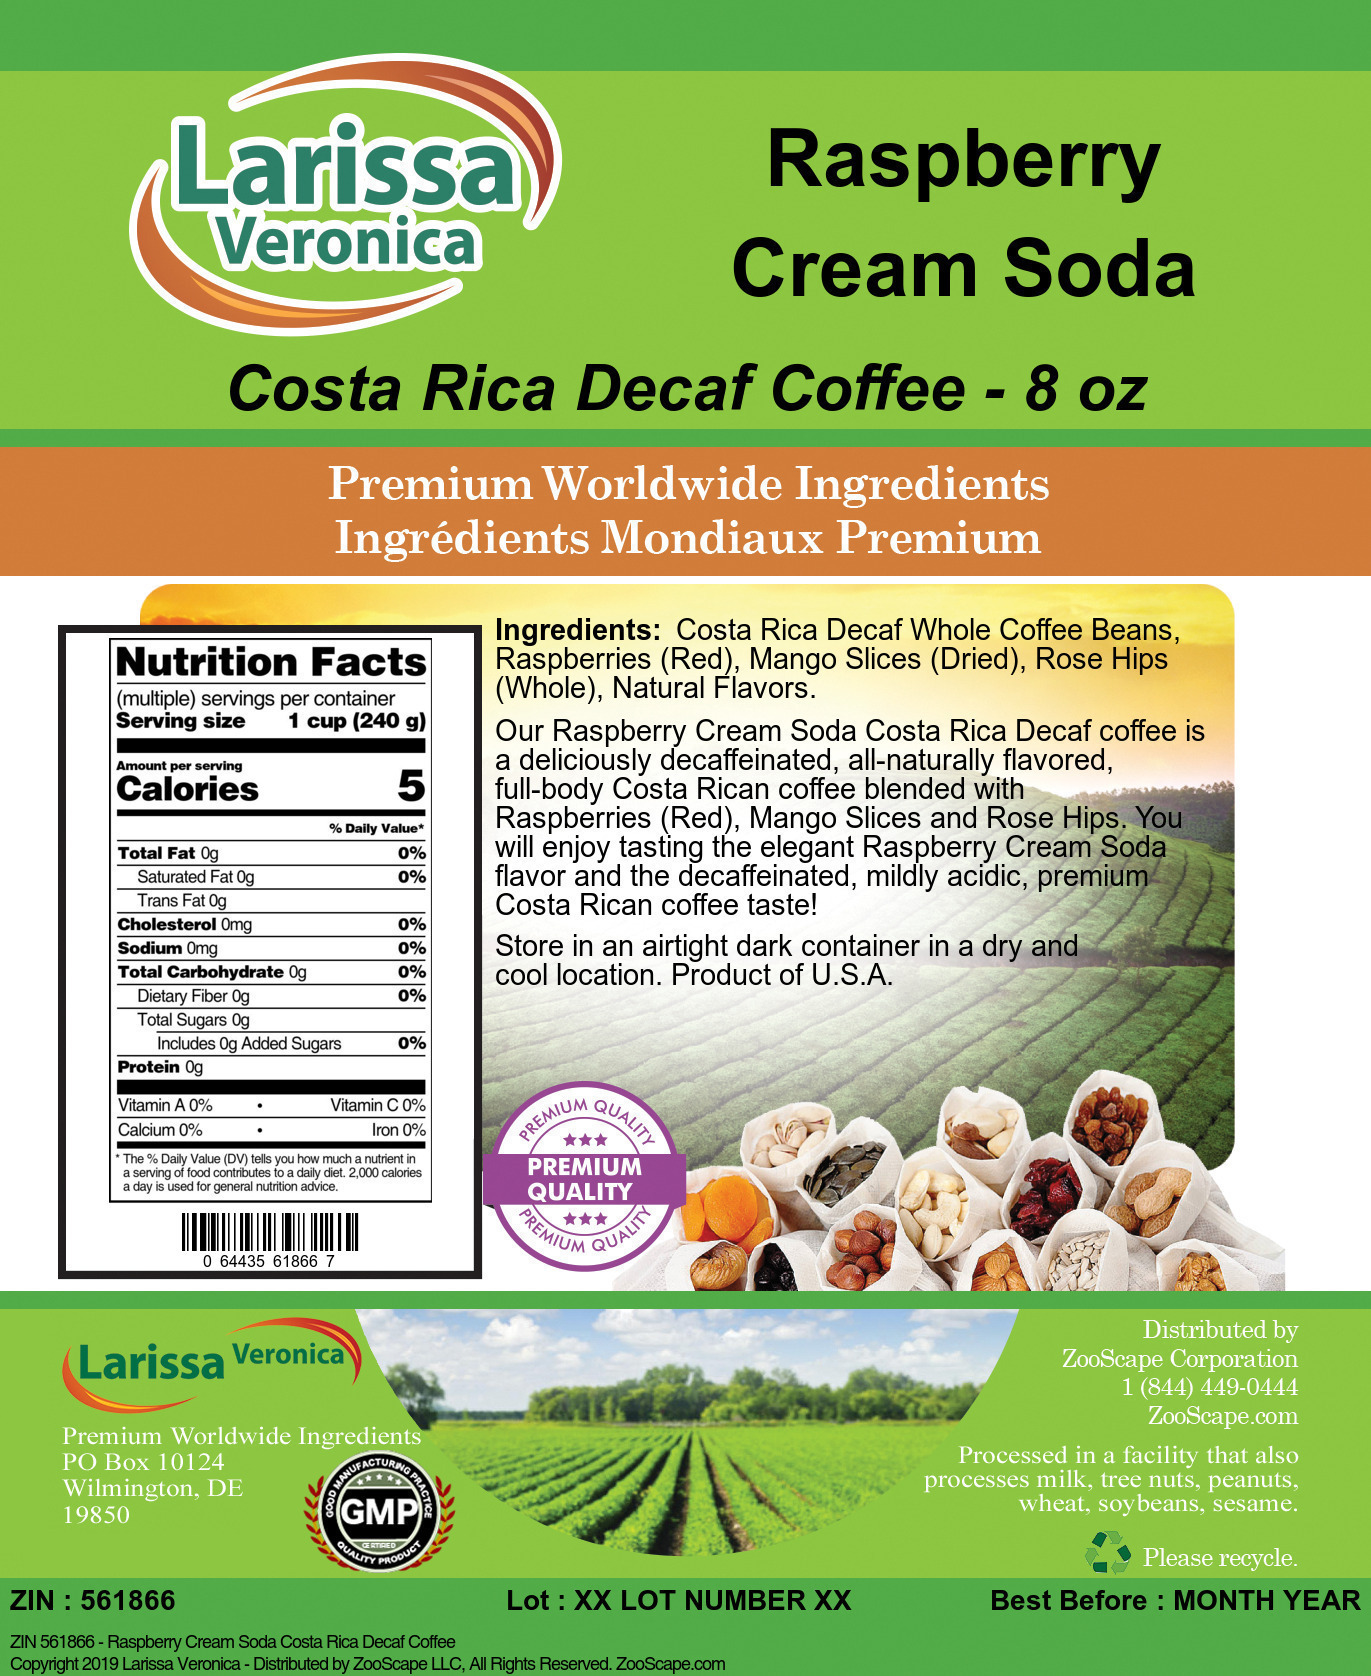 Raspberry Cream Soda Costa Rica Decaf Coffee - Label